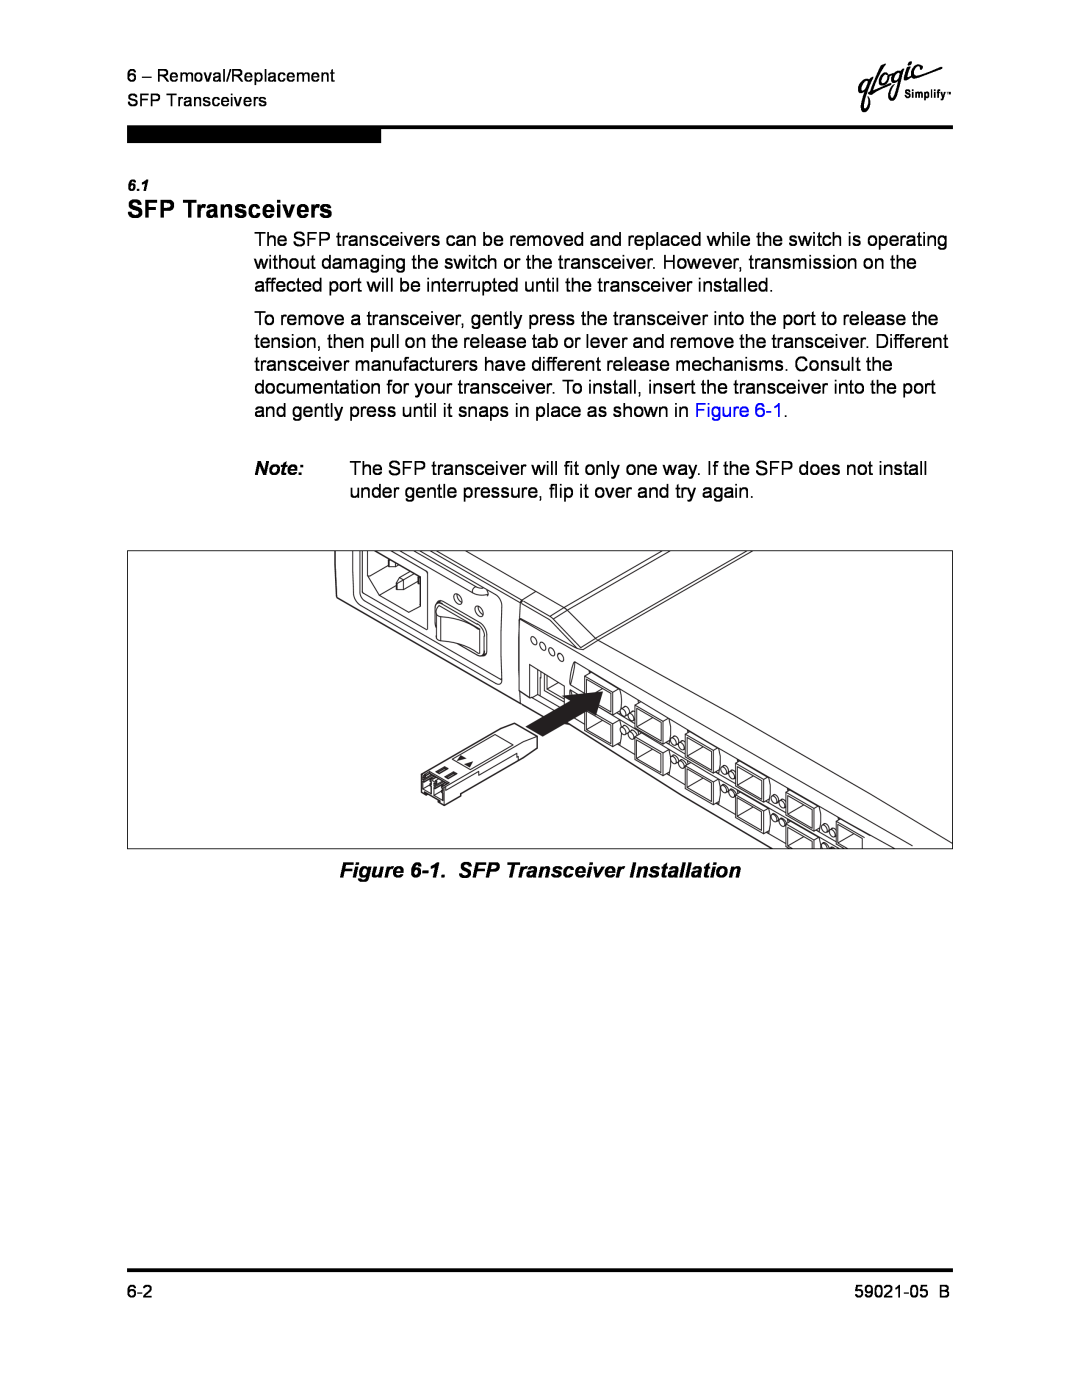 Q-Logic 59021-05 B manual SFP Transceivers, 1. SFP Transceiver Installation 